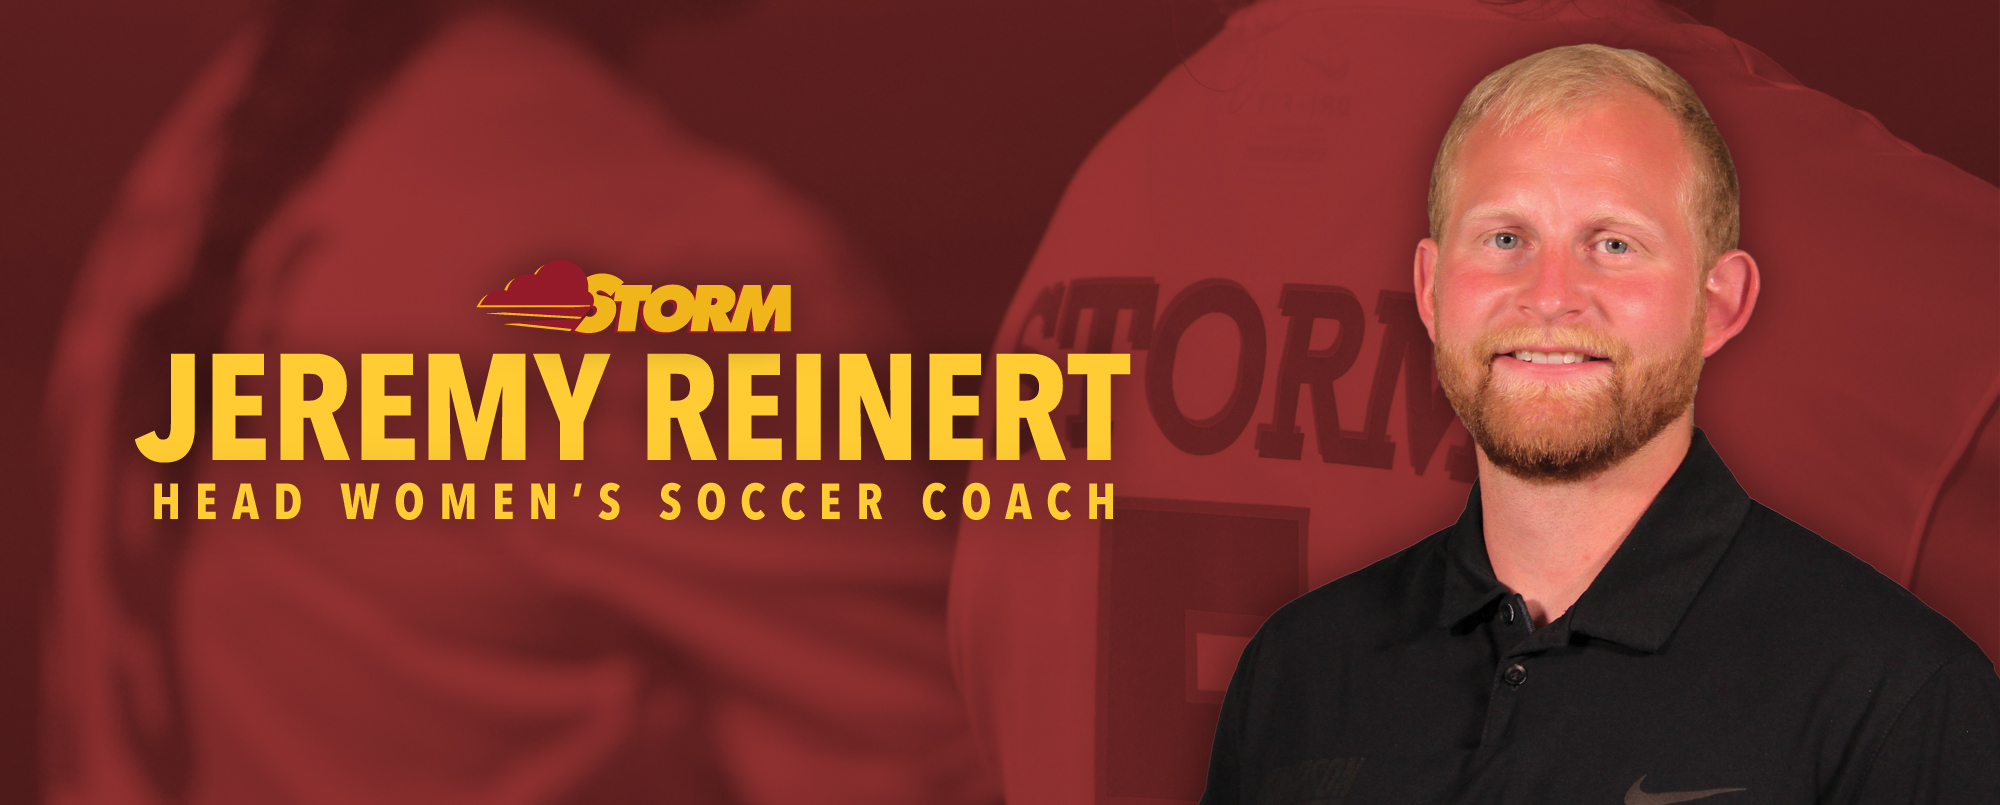 Jeremy Reinert has been hired as Simpson's head women's soccer coach.